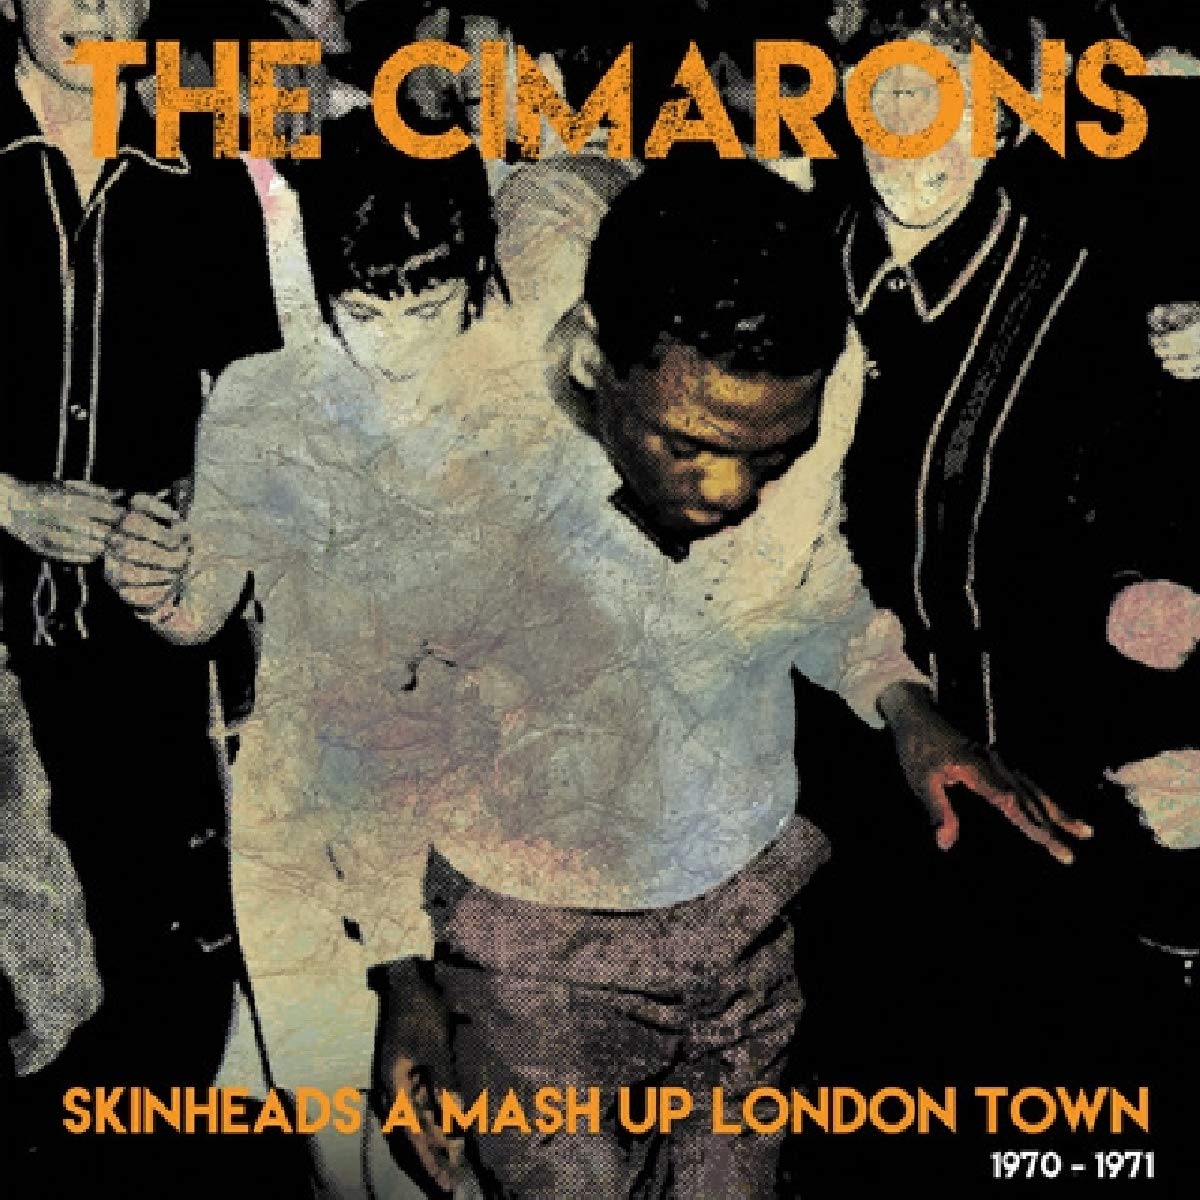 CIMARONS - SKINHEADS A MASH UP LONDON TOWN 1970-1971 Vinyl LP